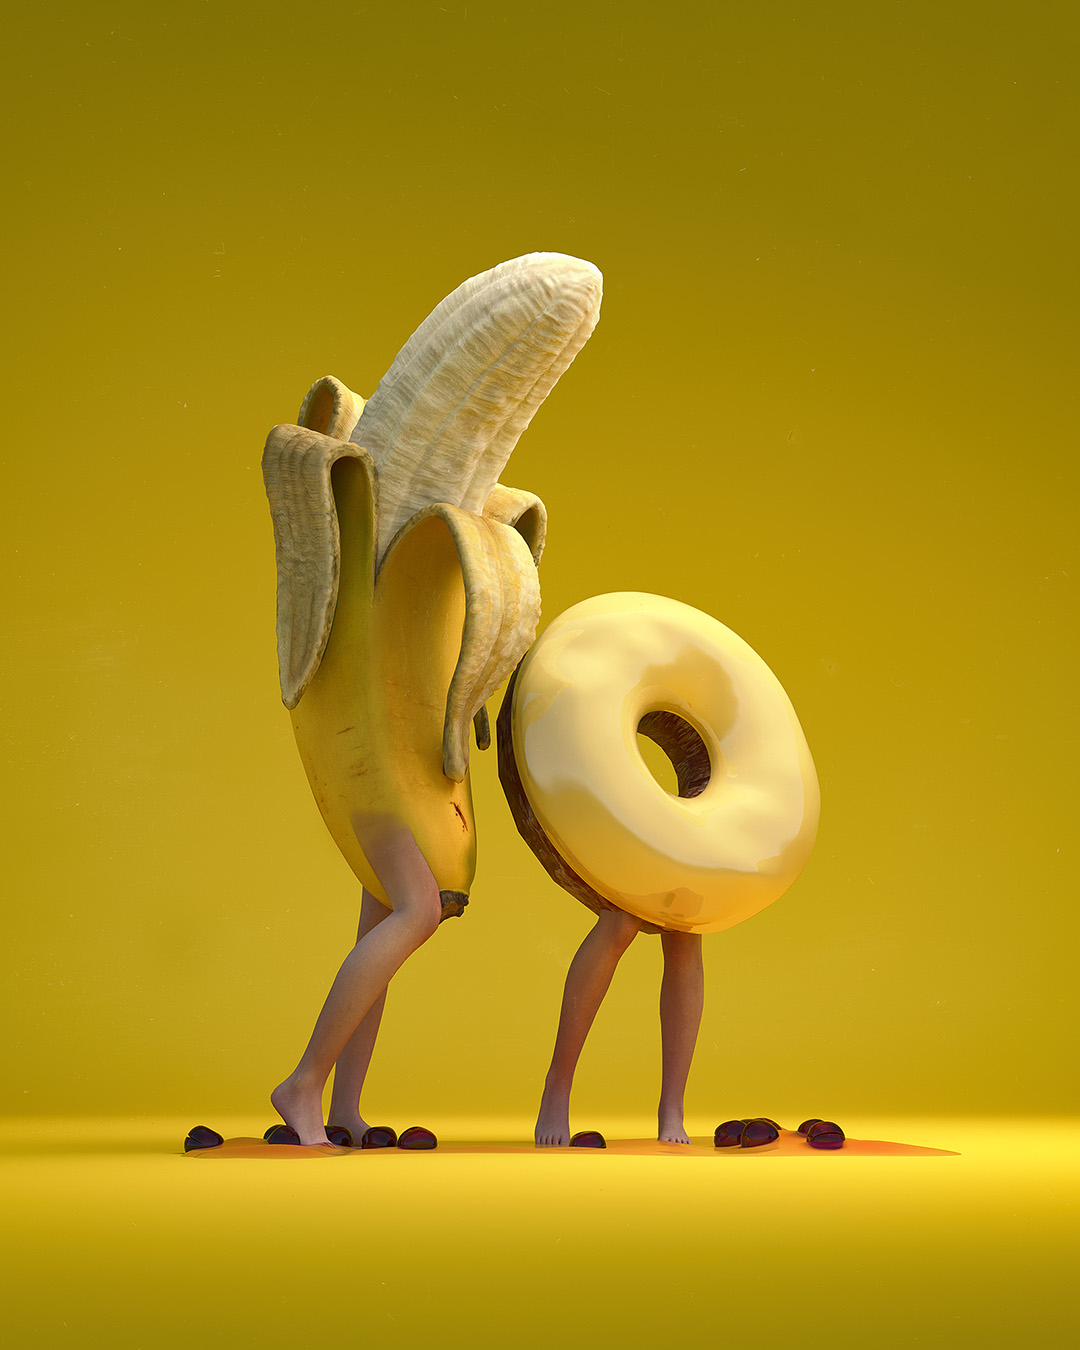 Banana & donut